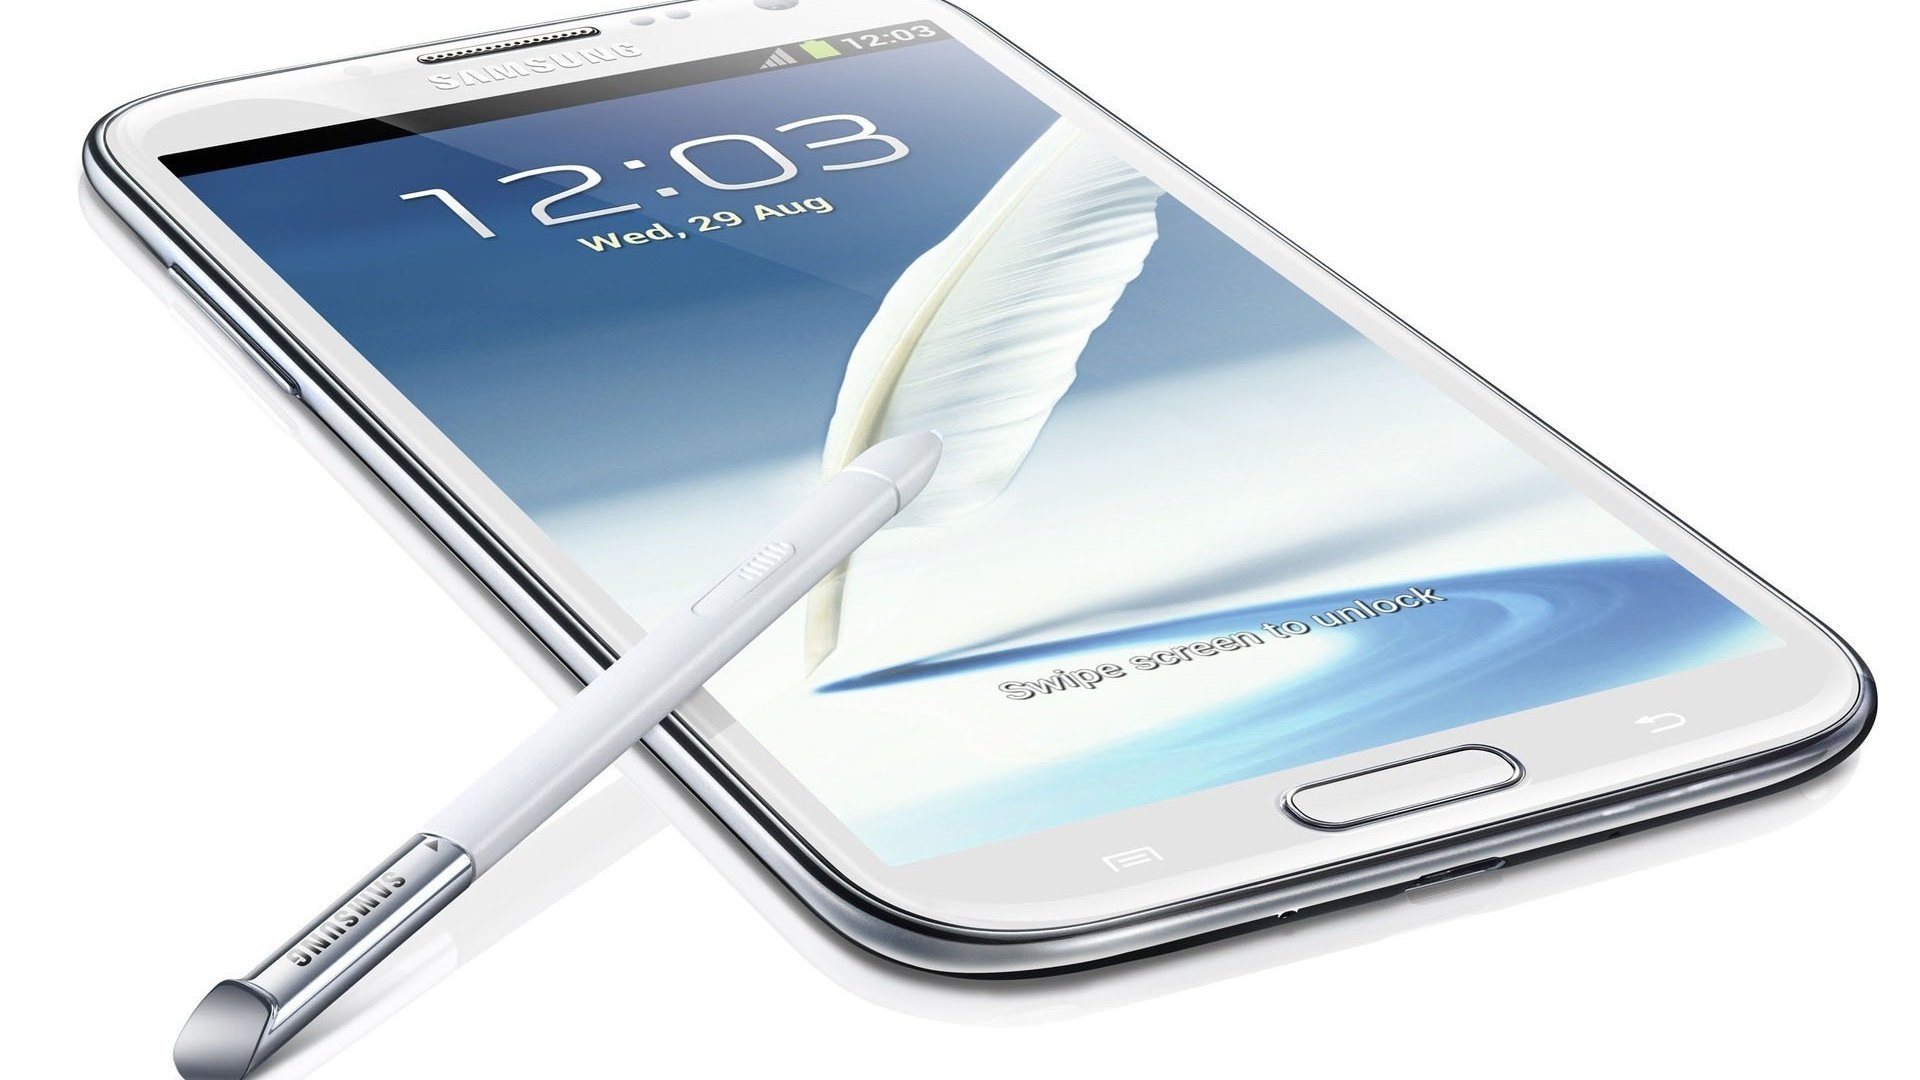 White Samsung Galaxy S3 for 1920 x 1080 HDTV 1080p resolution